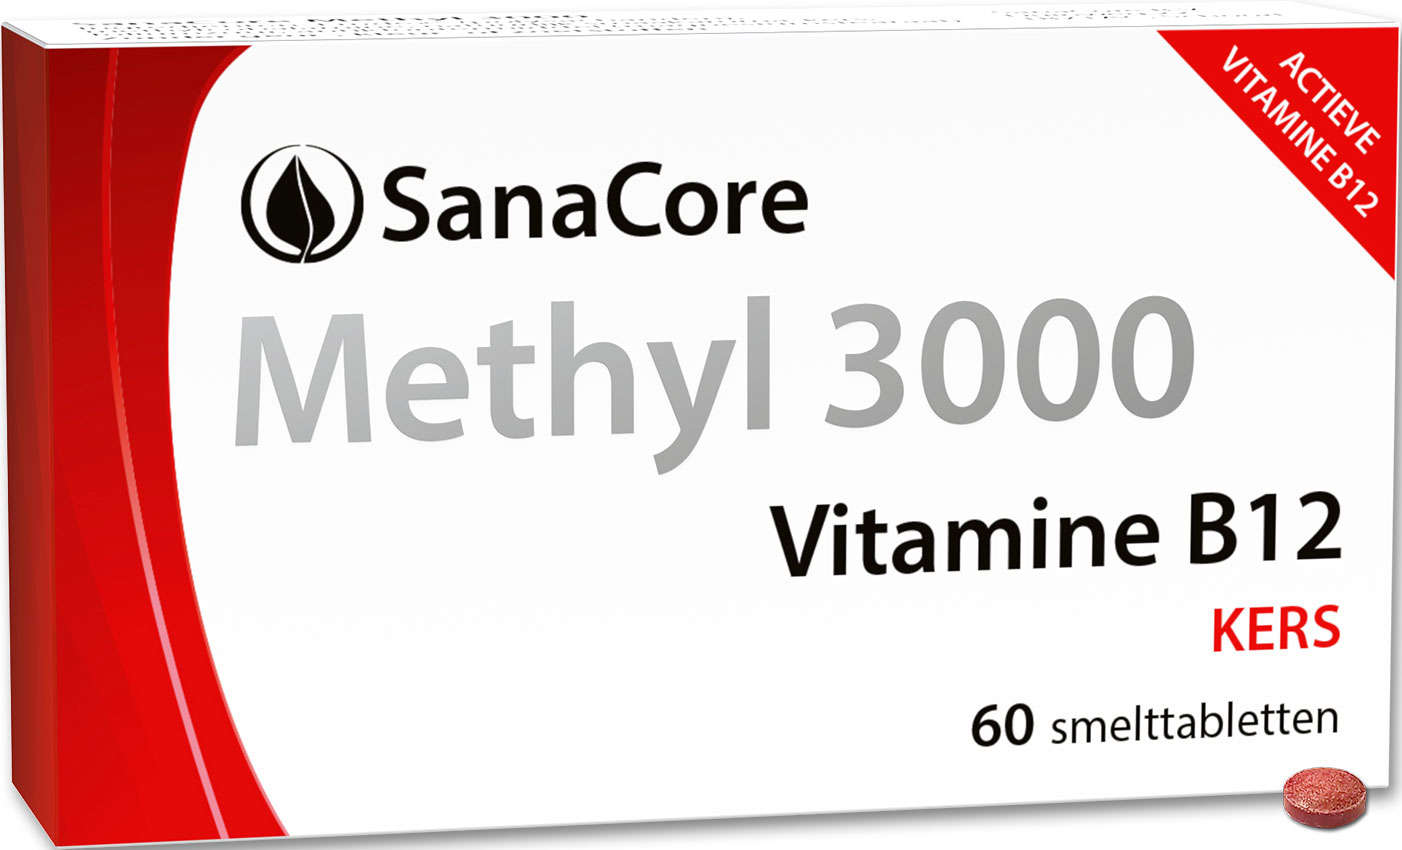 Methyl 3000 ZONDER FOLIUMZUUR